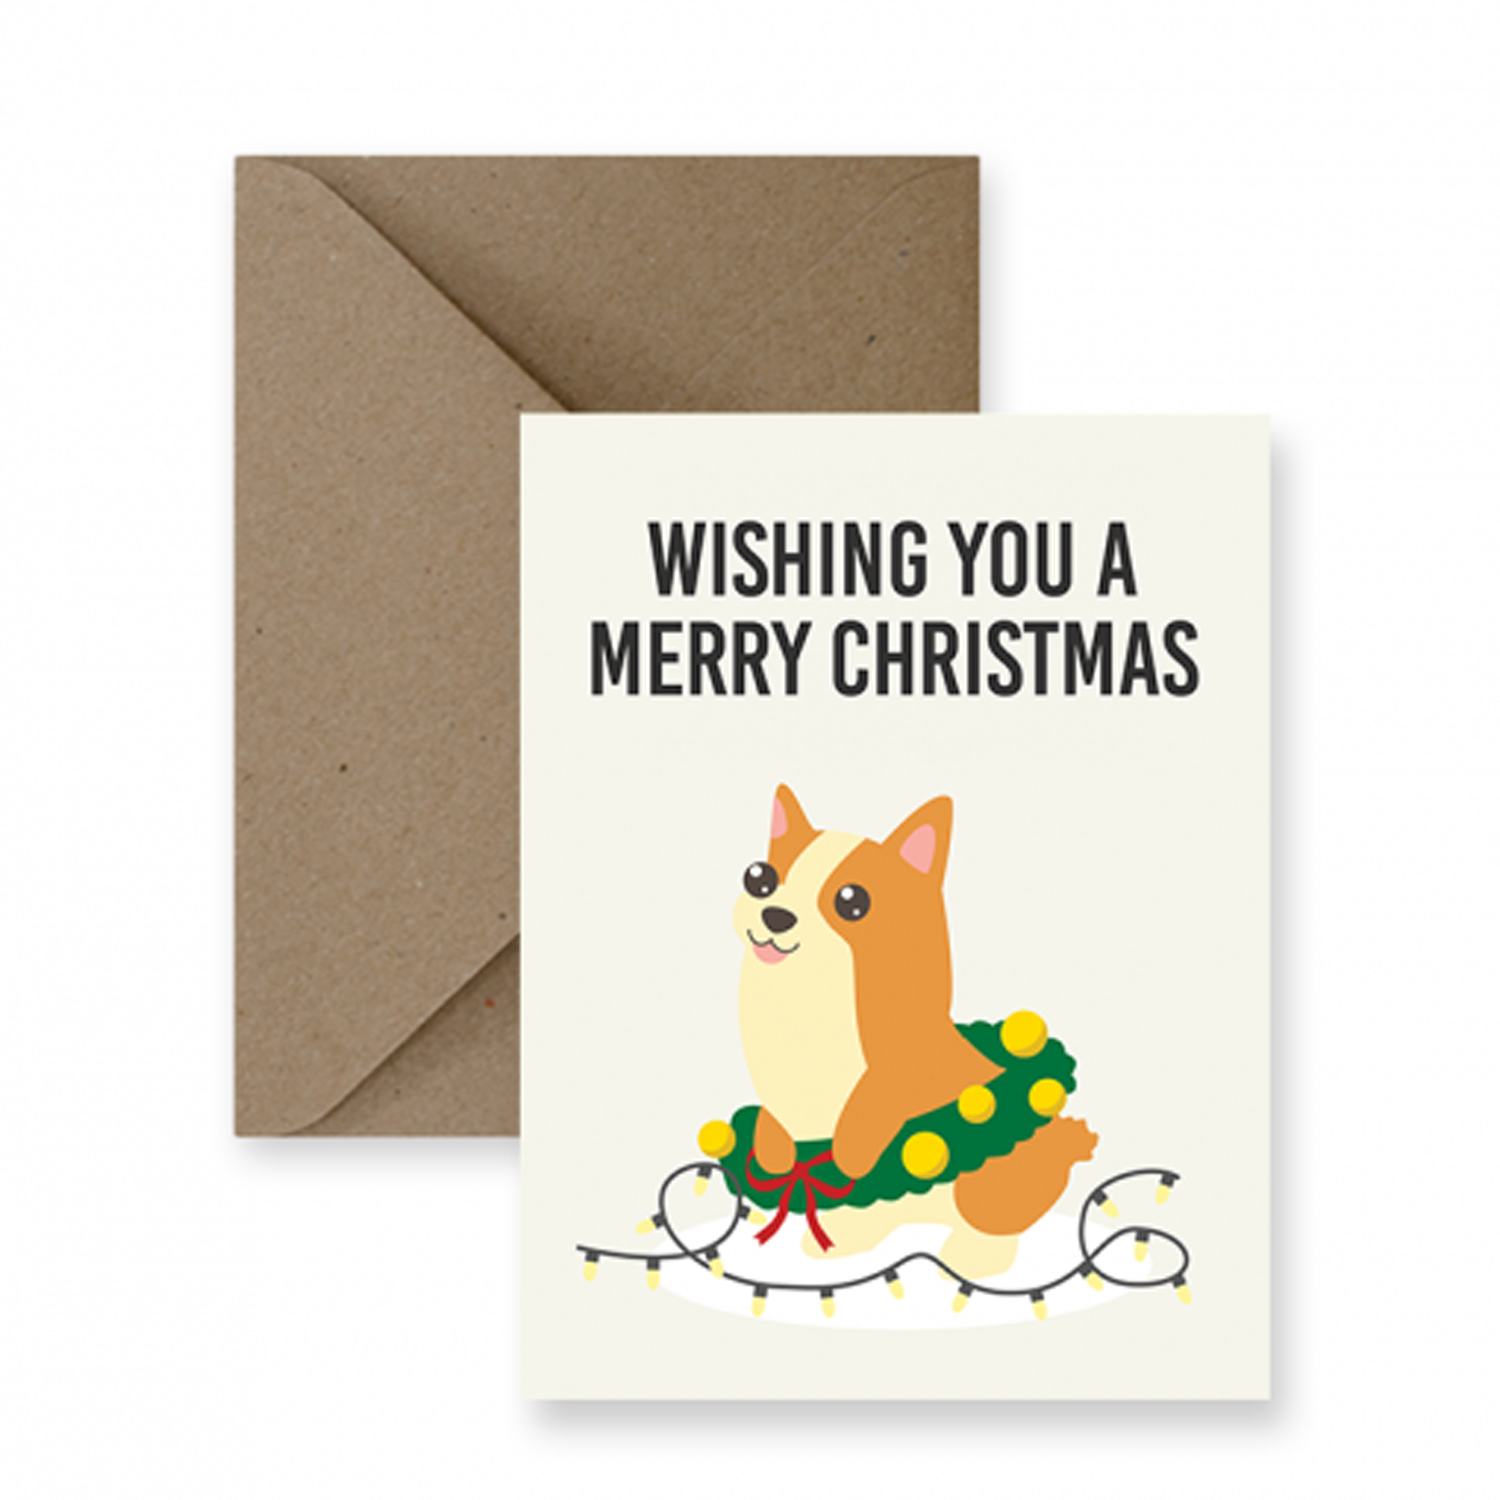 IMPAPER: Corgi Christmas Card Product Image 1 of 4